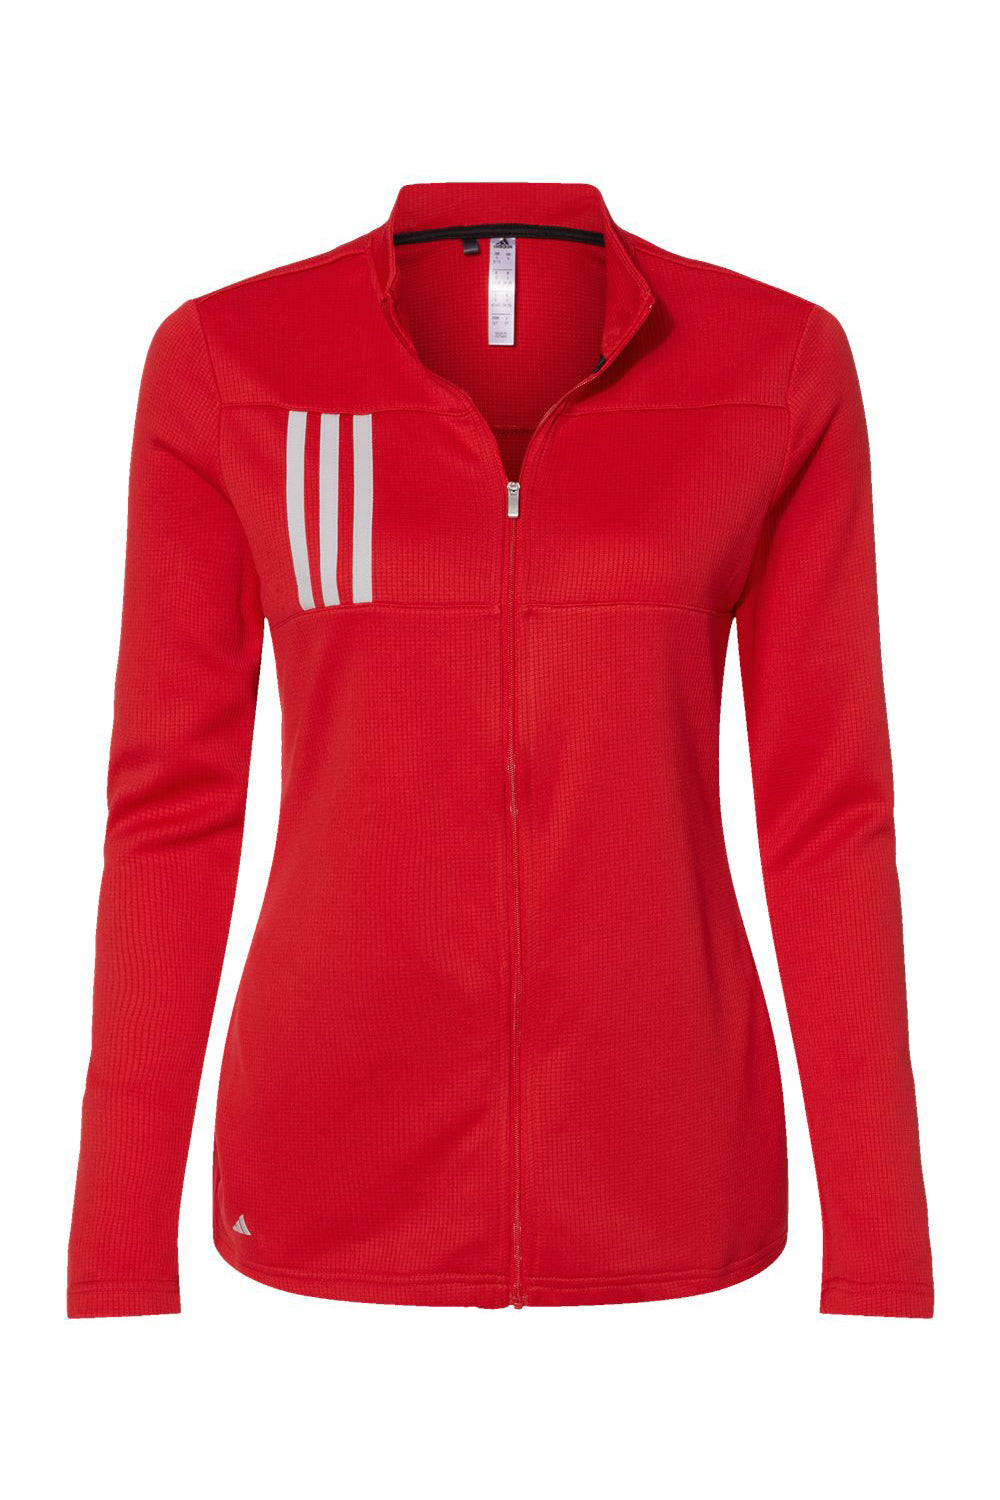 Adidas A483 Womens 3 Stripes Double Knit Moisture Wicking 1/4 Zip Sweatshirt Team Collegiate Red/Grey Flat Front